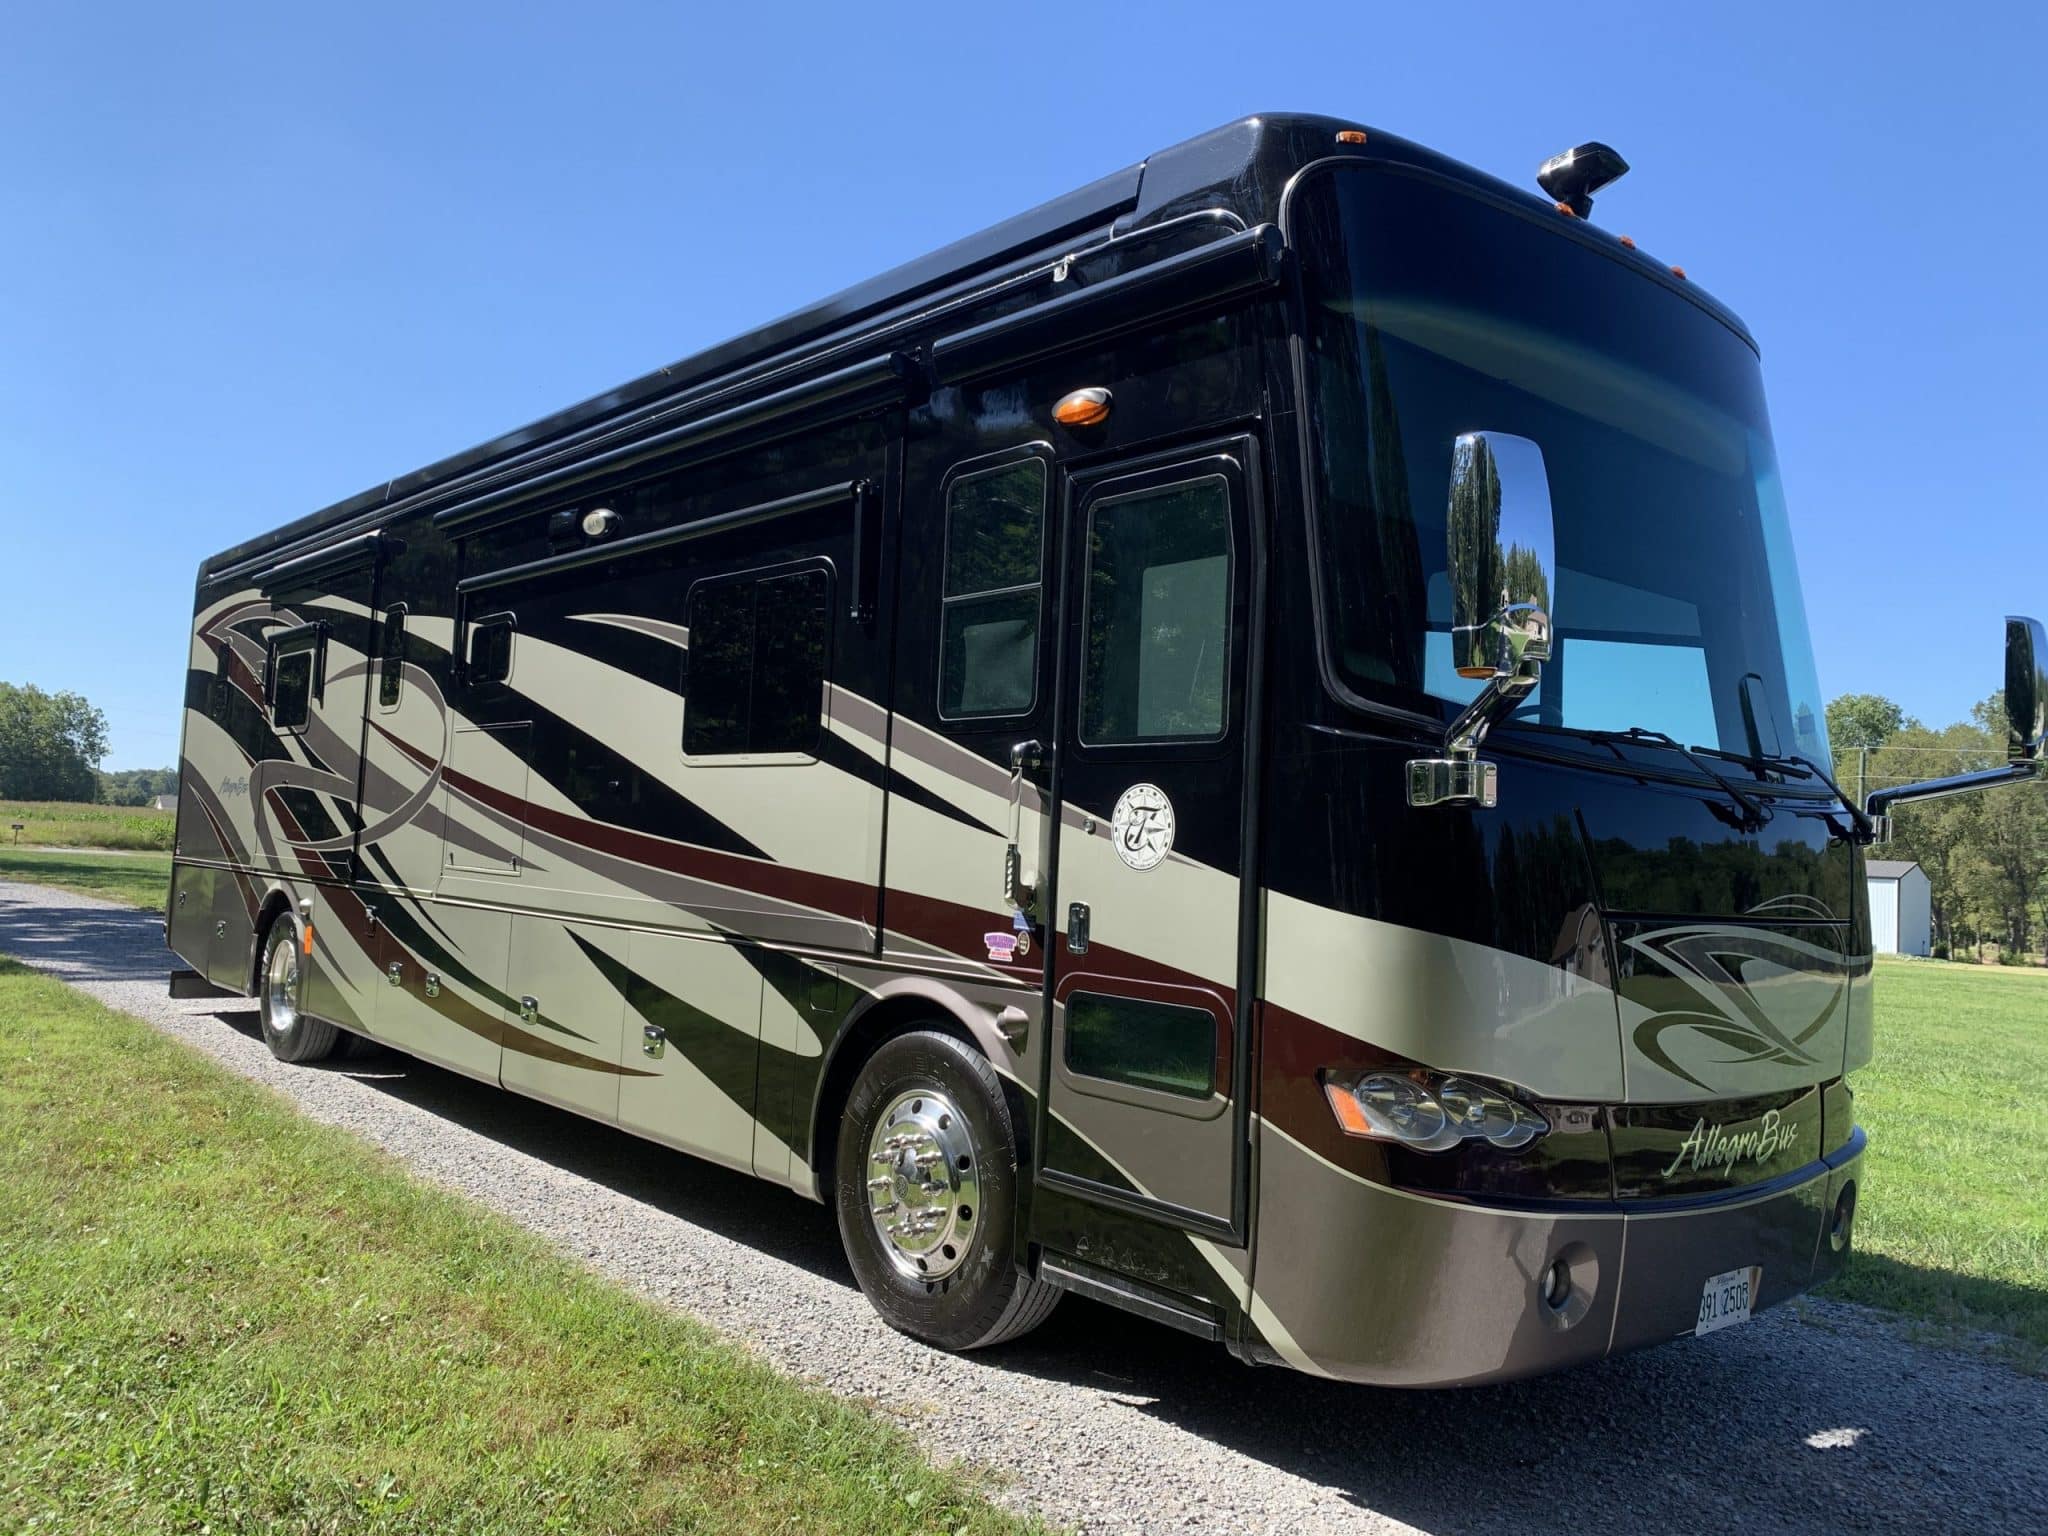 Motorhome, Camper Van, Travel Coach Rv Vehicle Inspection Services